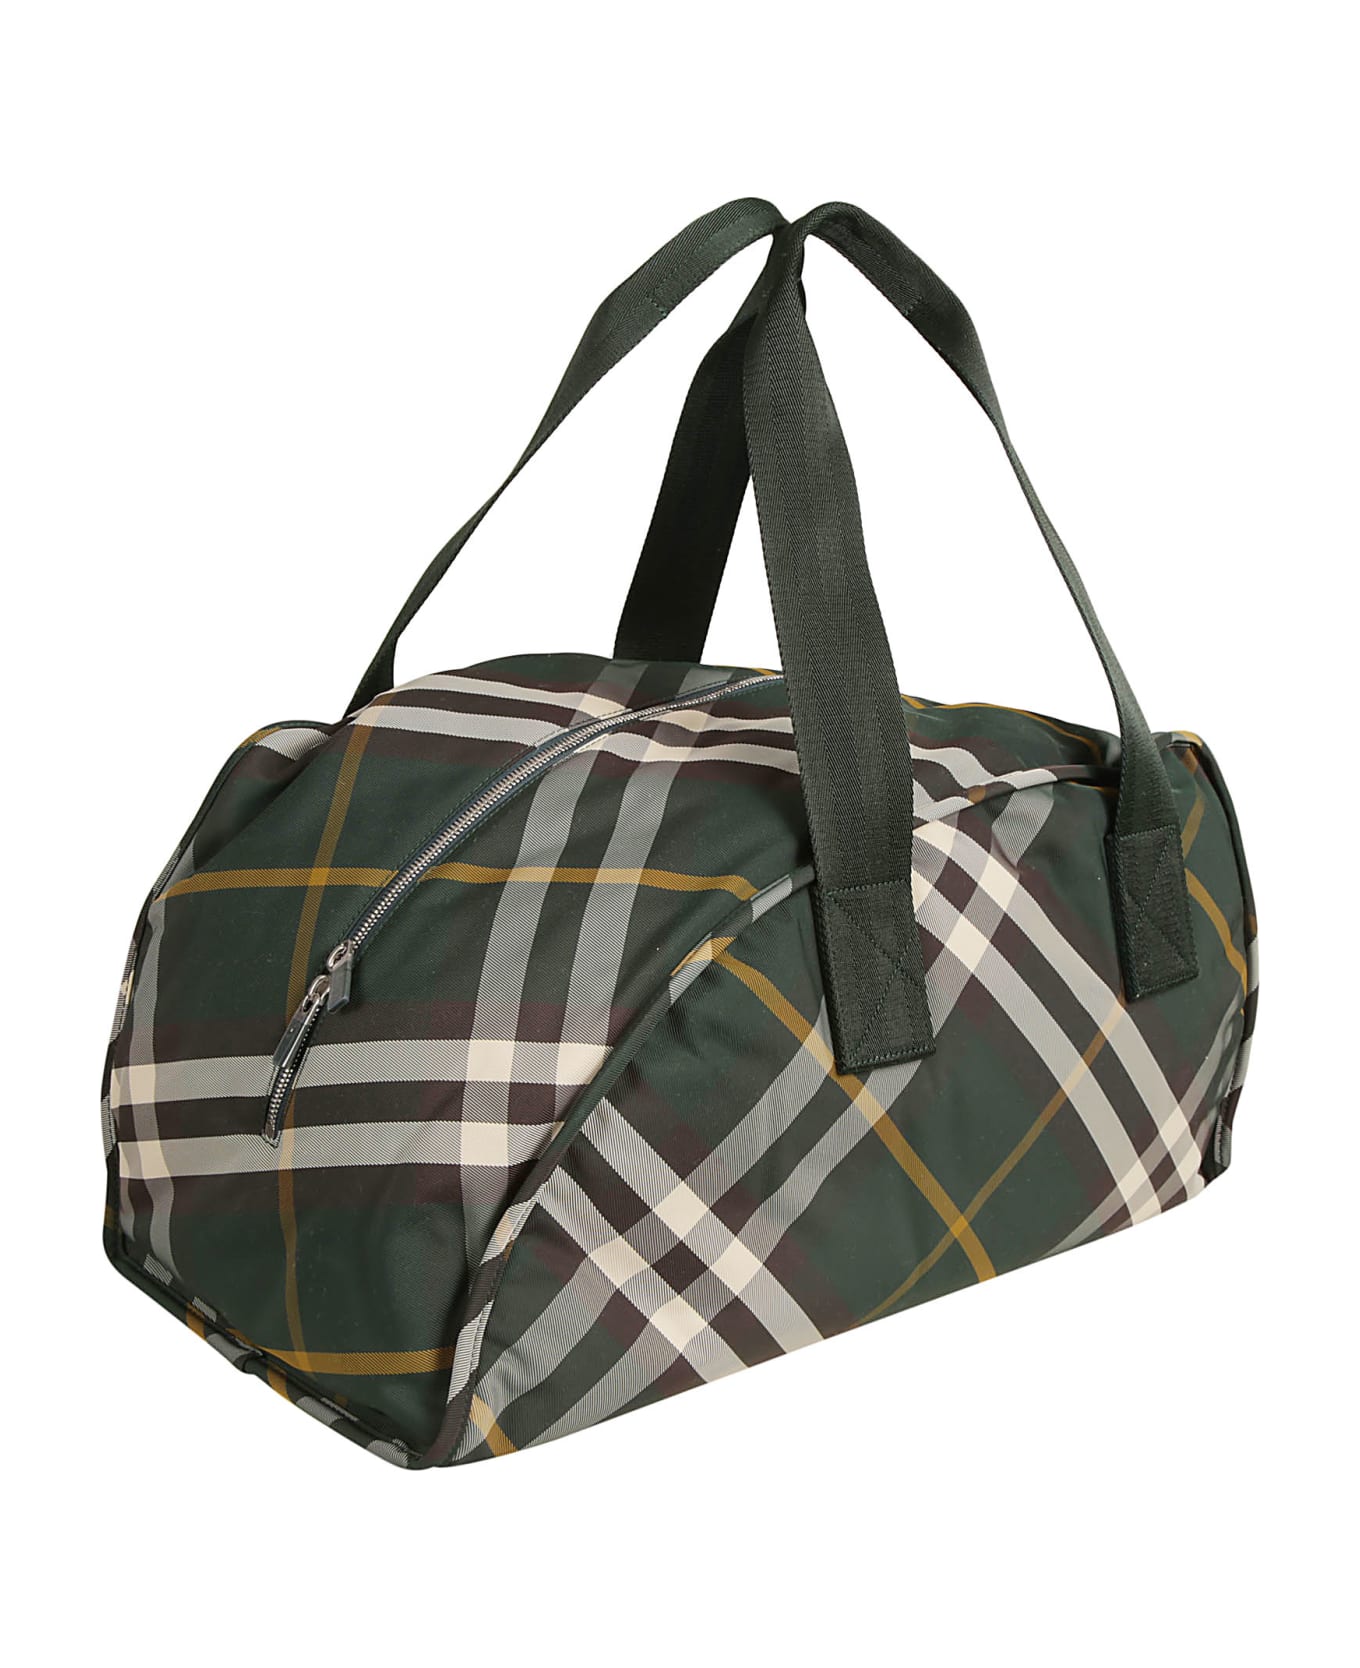 Burberry Shield Duffle Bag - Ivy